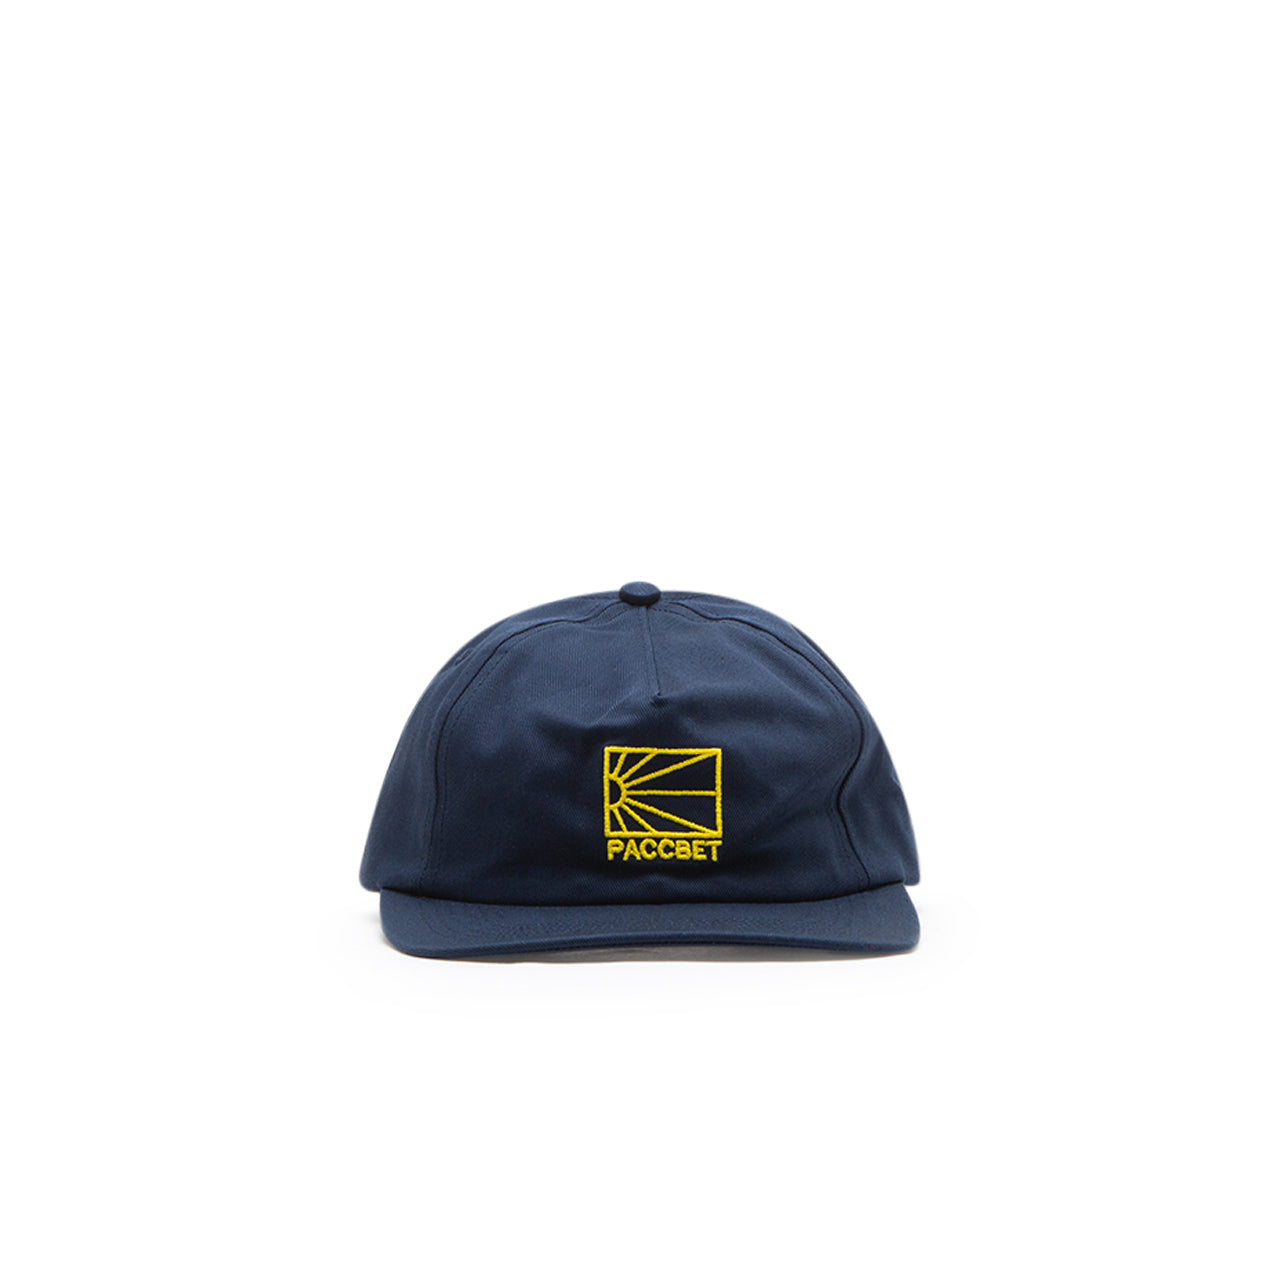 rassvet logo cap (navy)